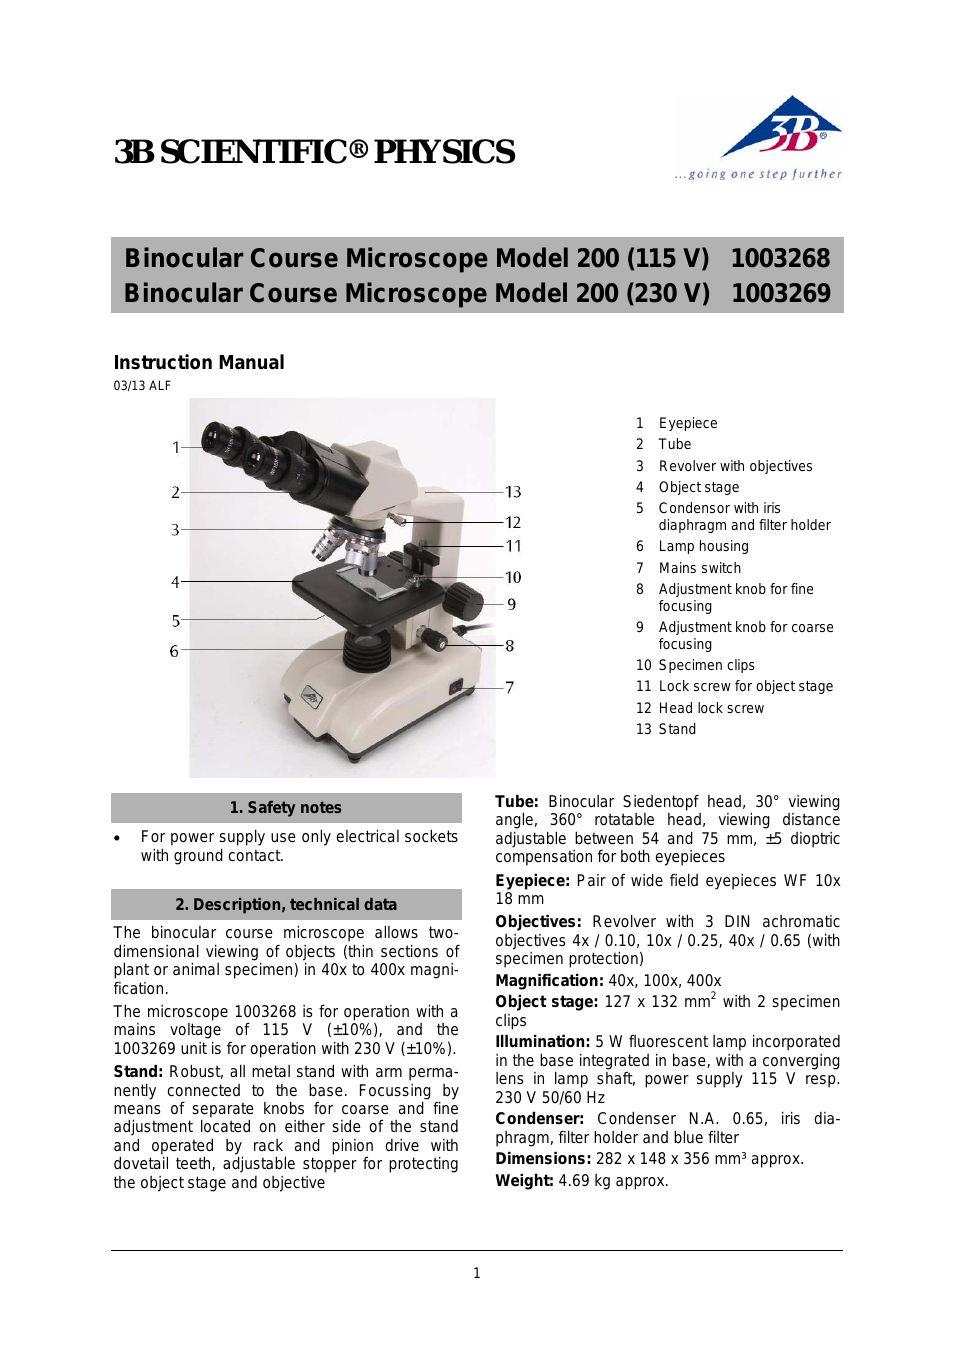 Binocular Course Microscope Model 200 (230 V, 50__60 Hz)